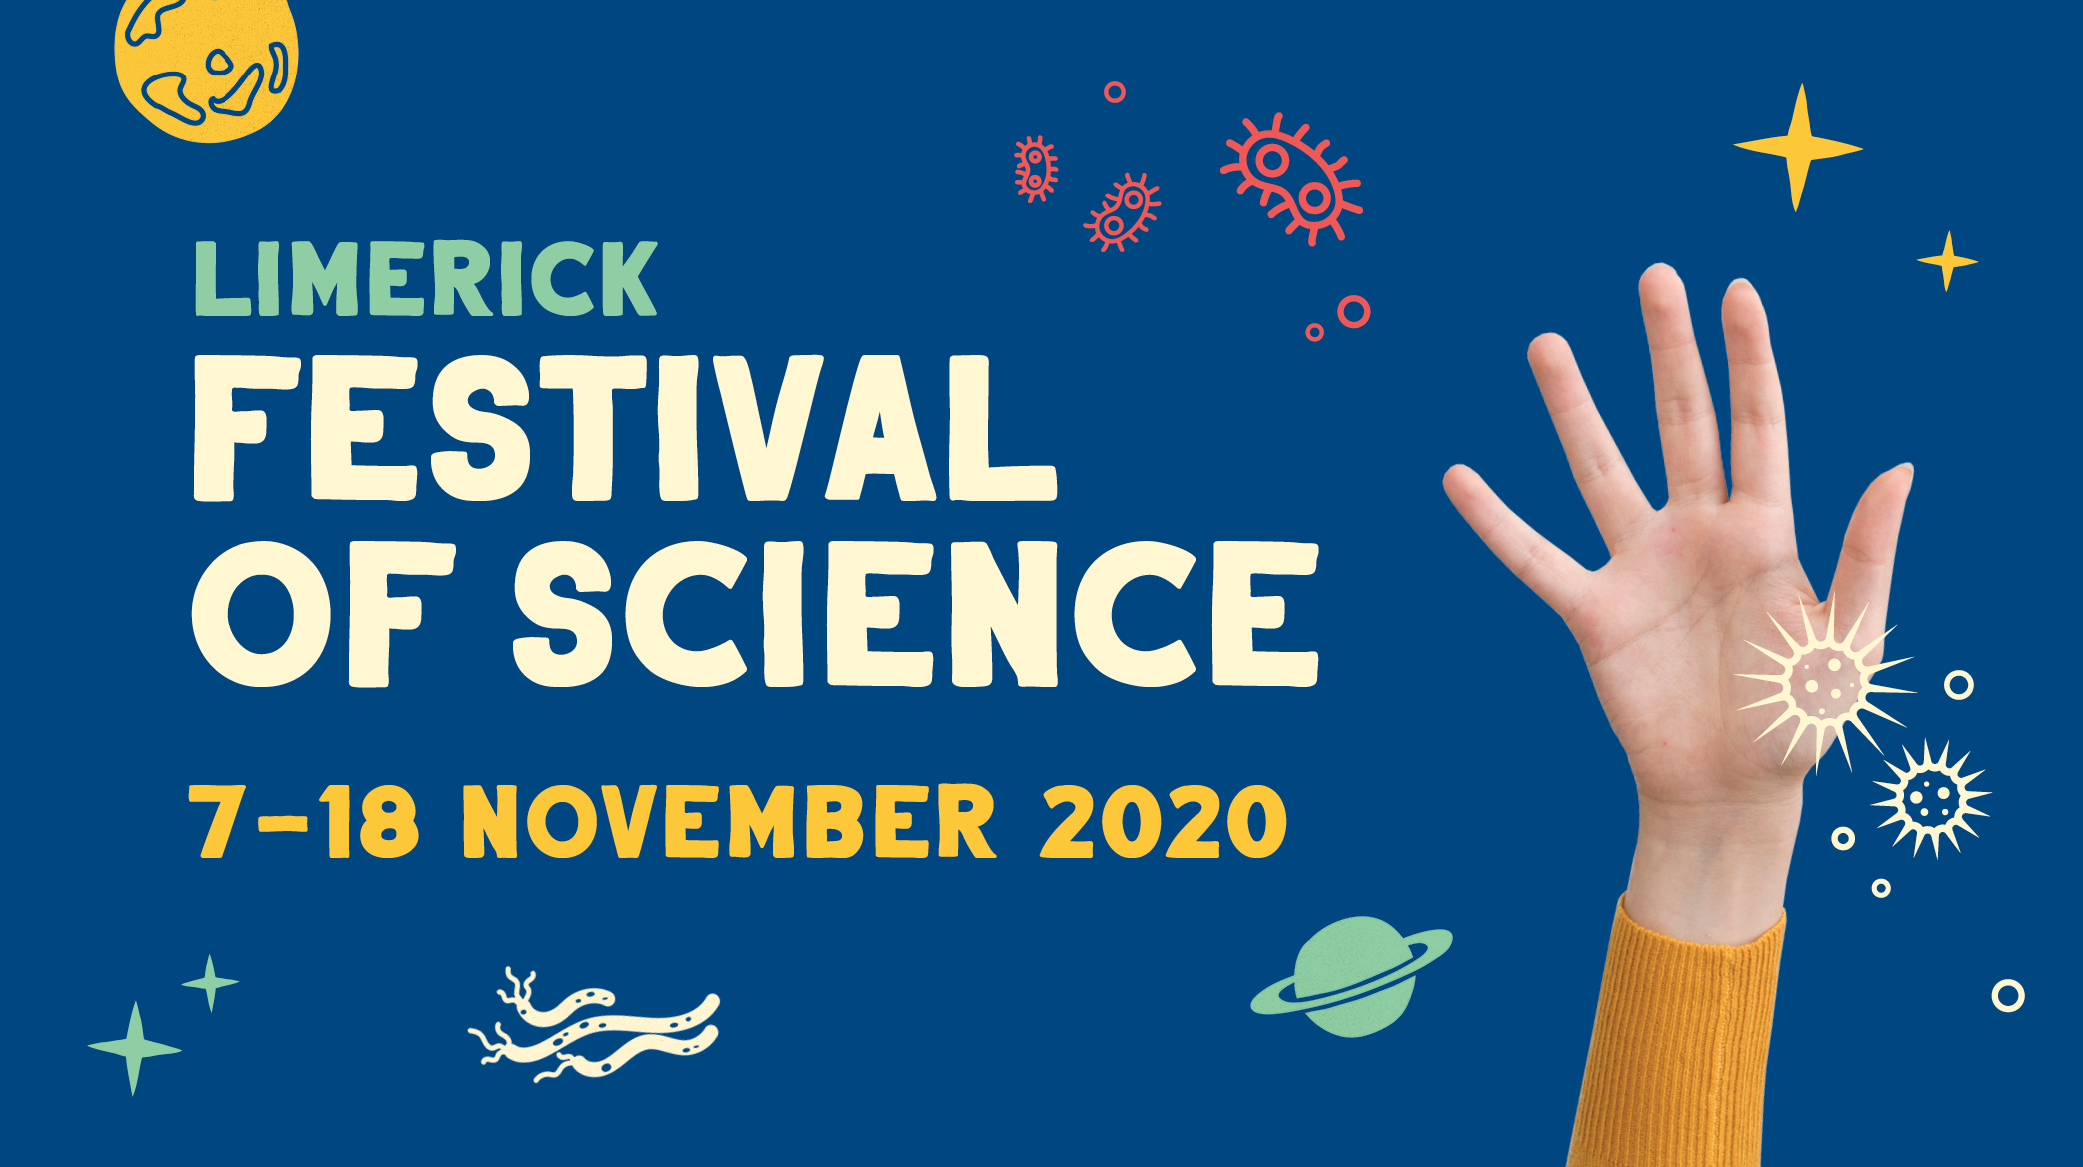 Limerick Festival of Science 2020